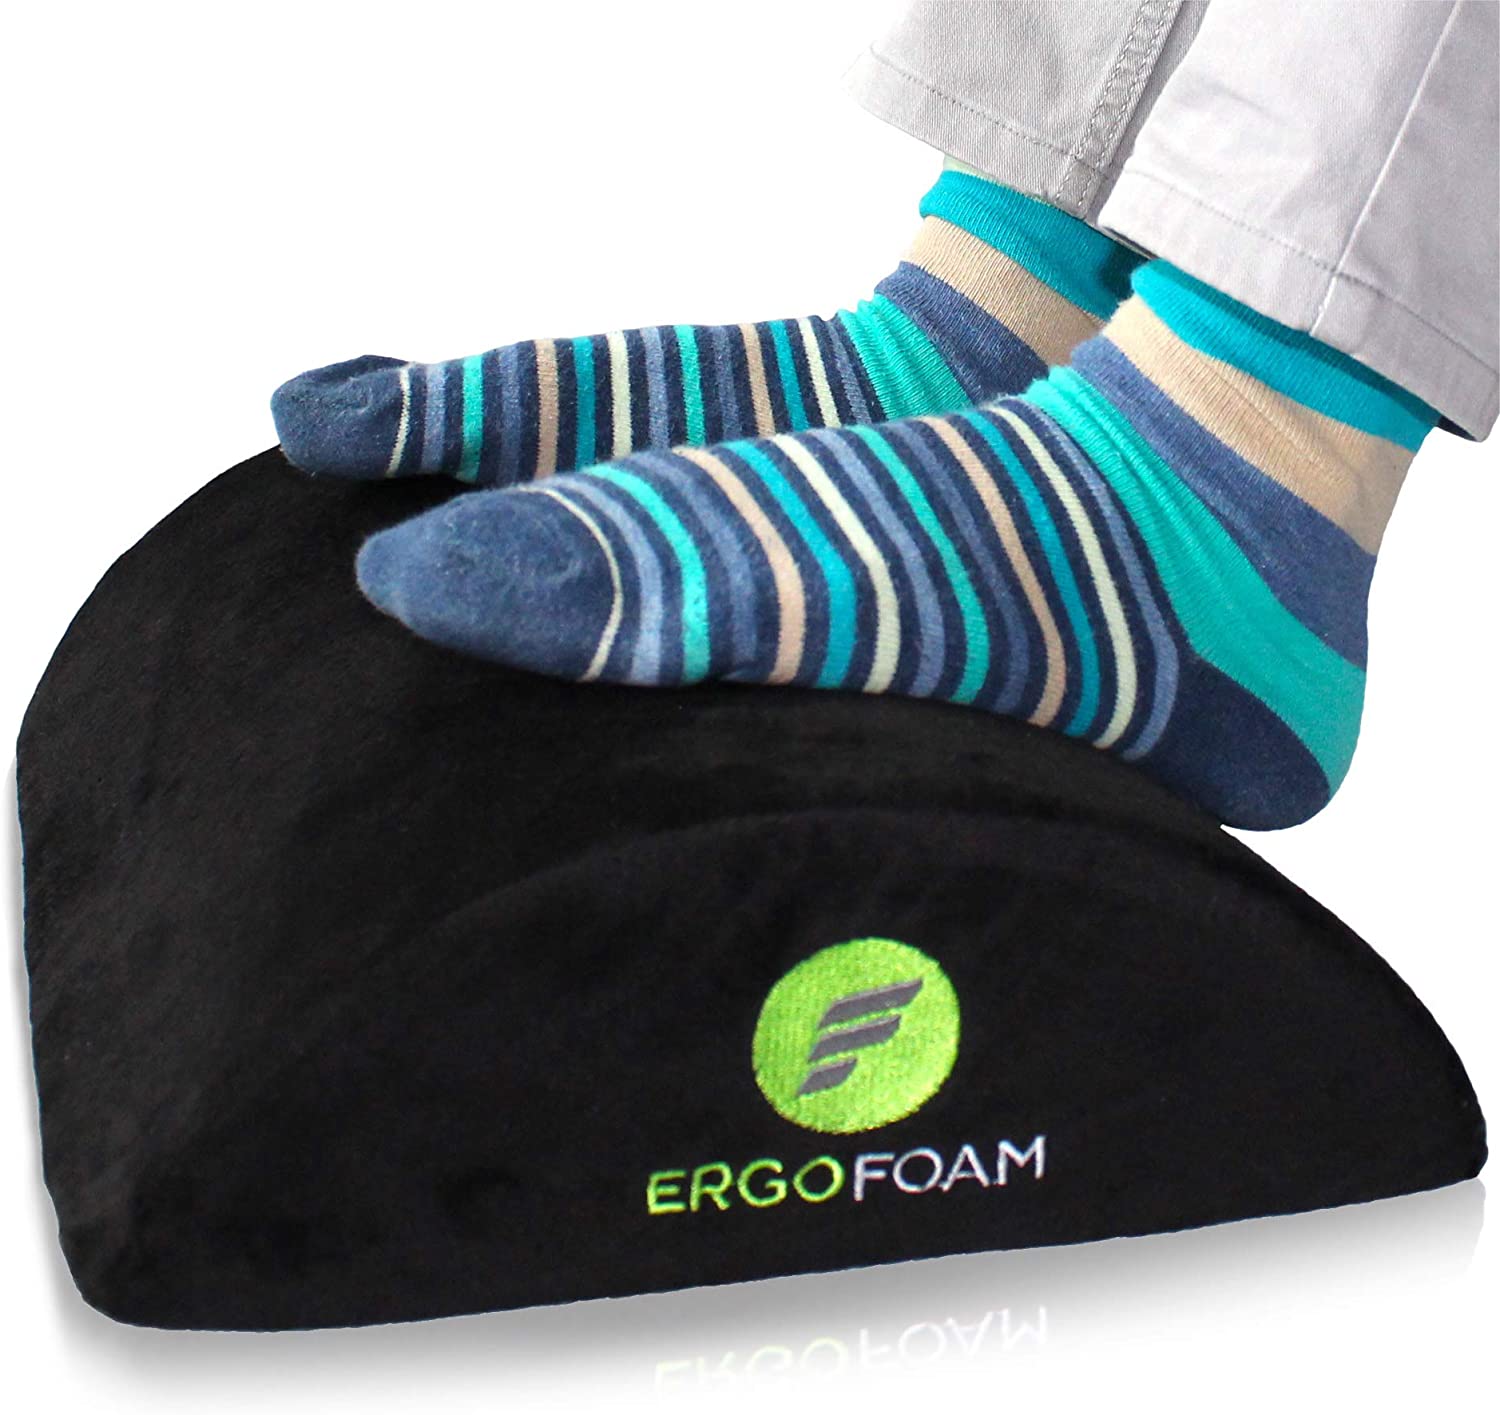 Best foot rest under desk under desk footrest – ErgoFoam